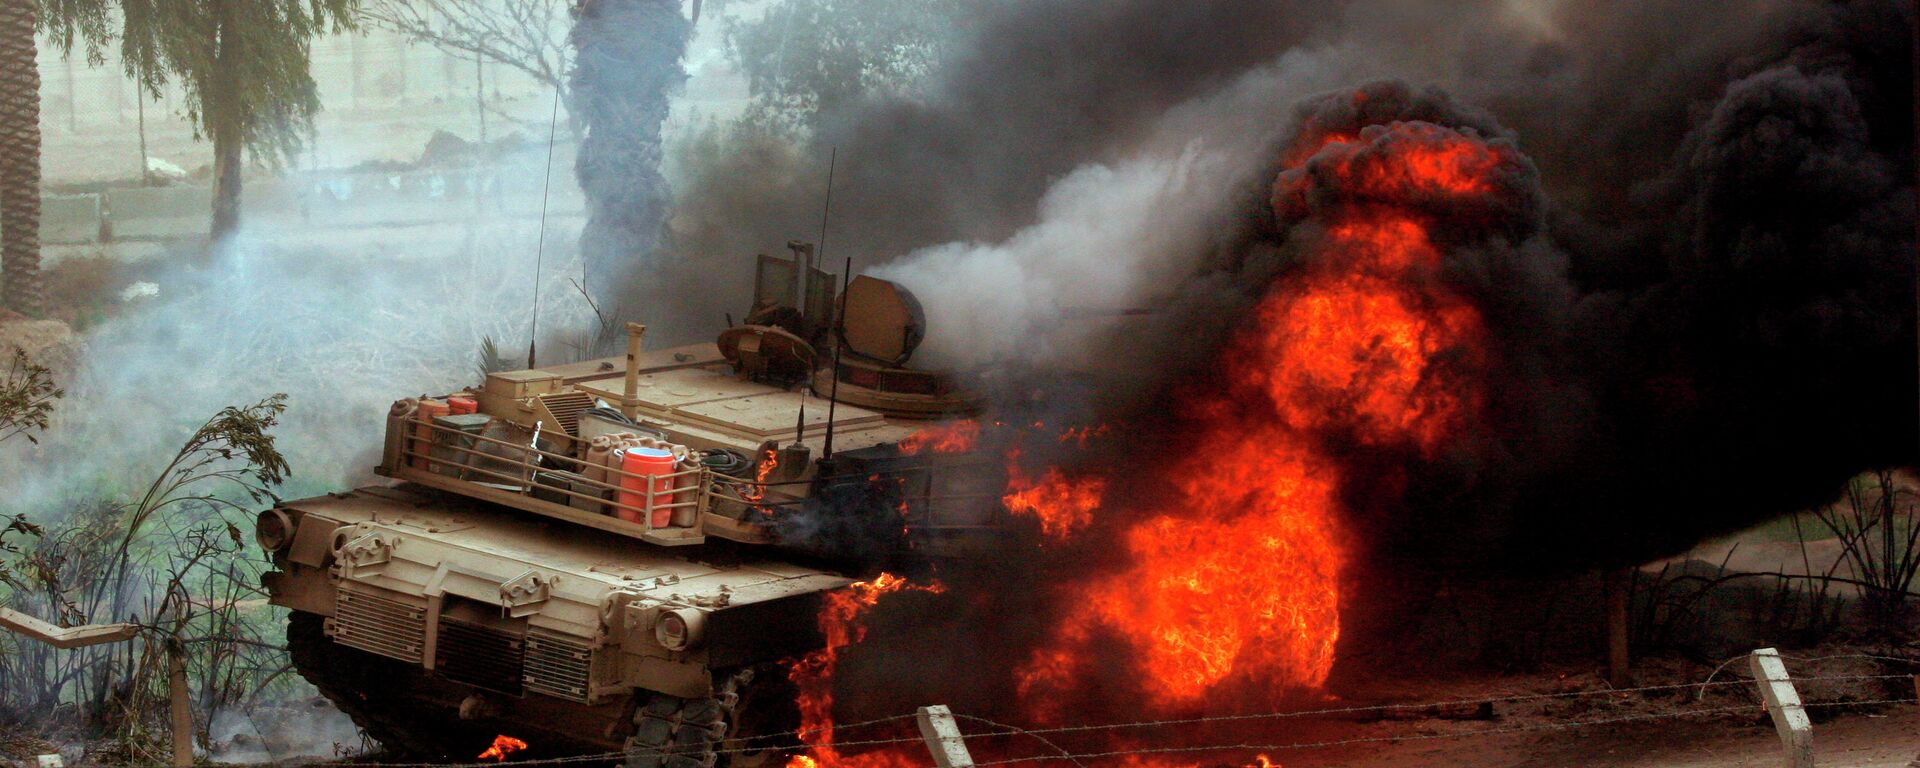 Huge flames come out of a US Abrams battle tank. - سبوتنيك عربي, 1920, 08.09.2015